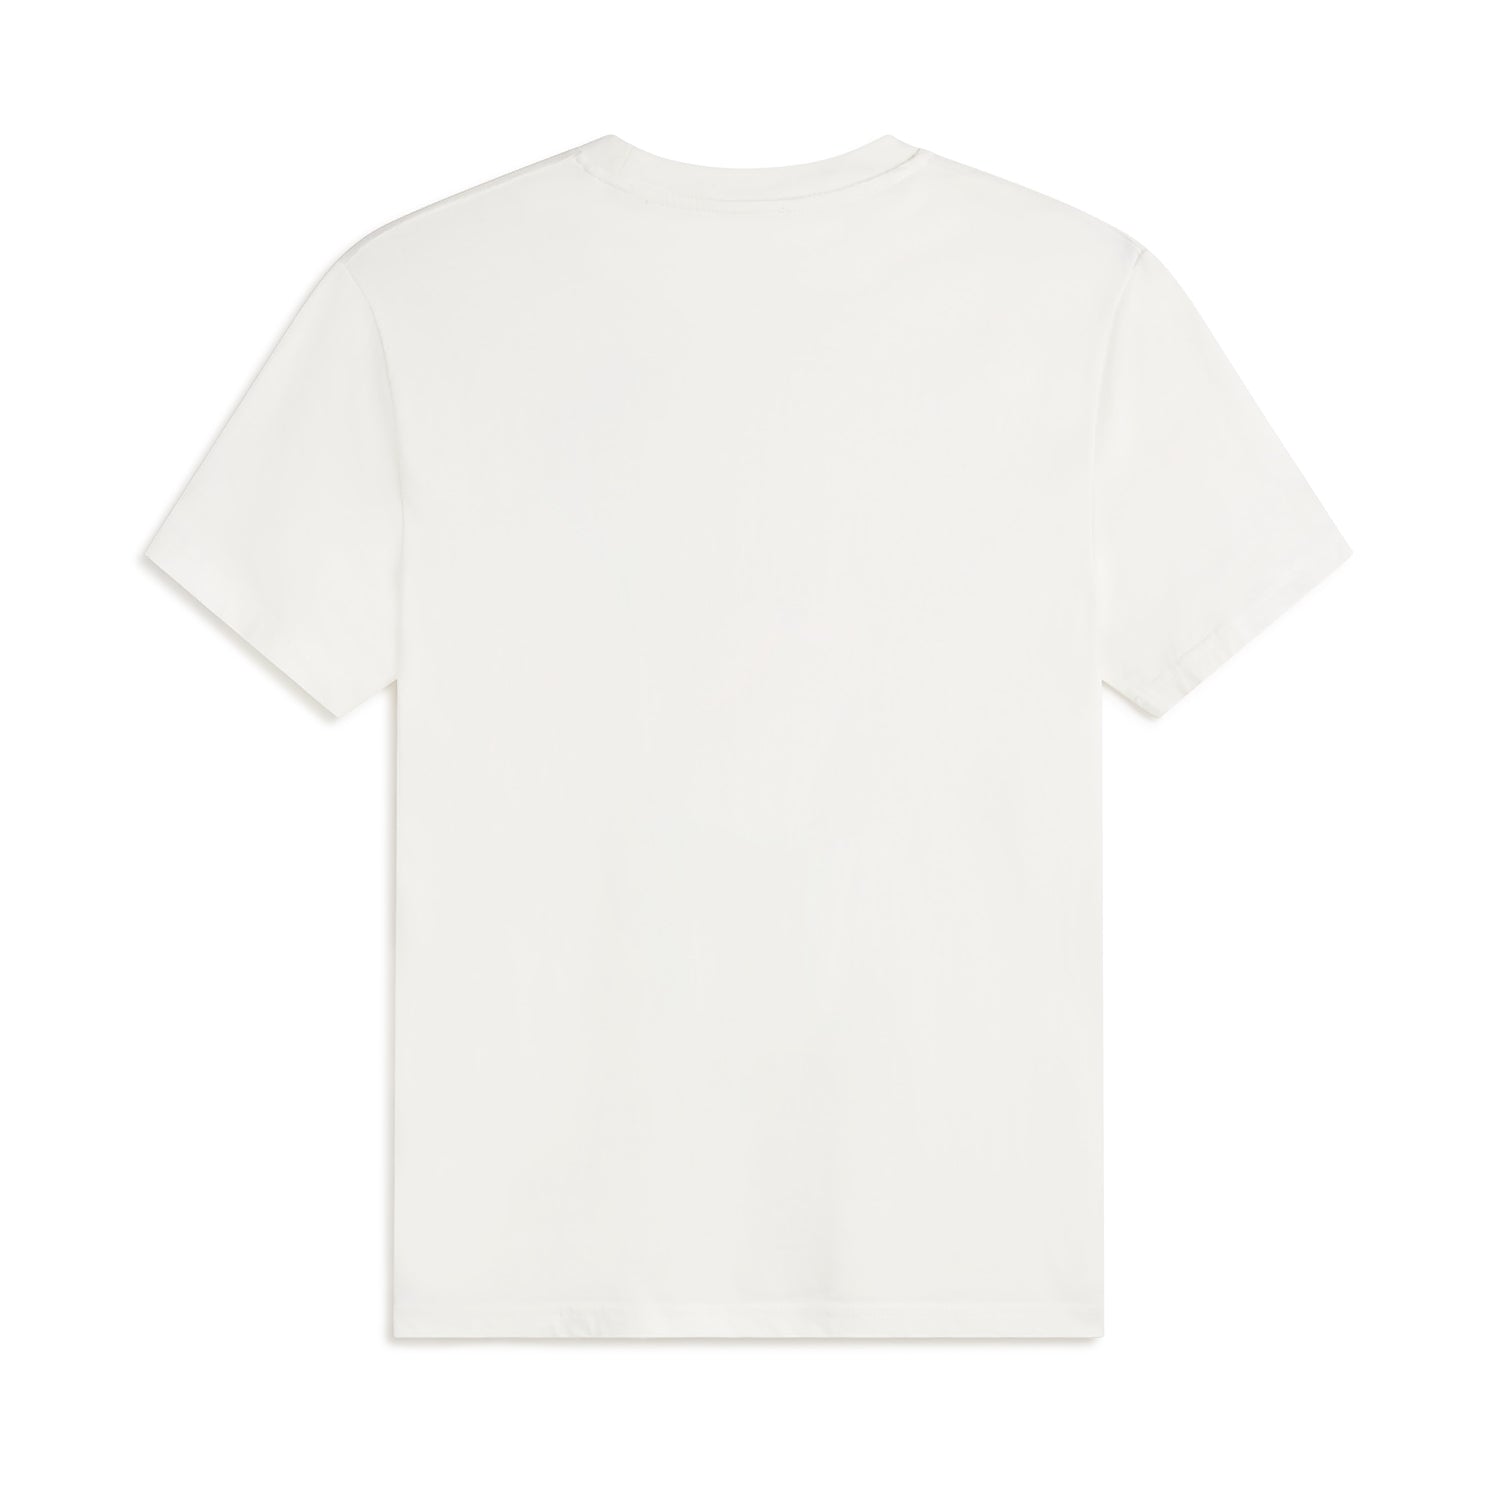 Camiseta LESS IS MORE Off white